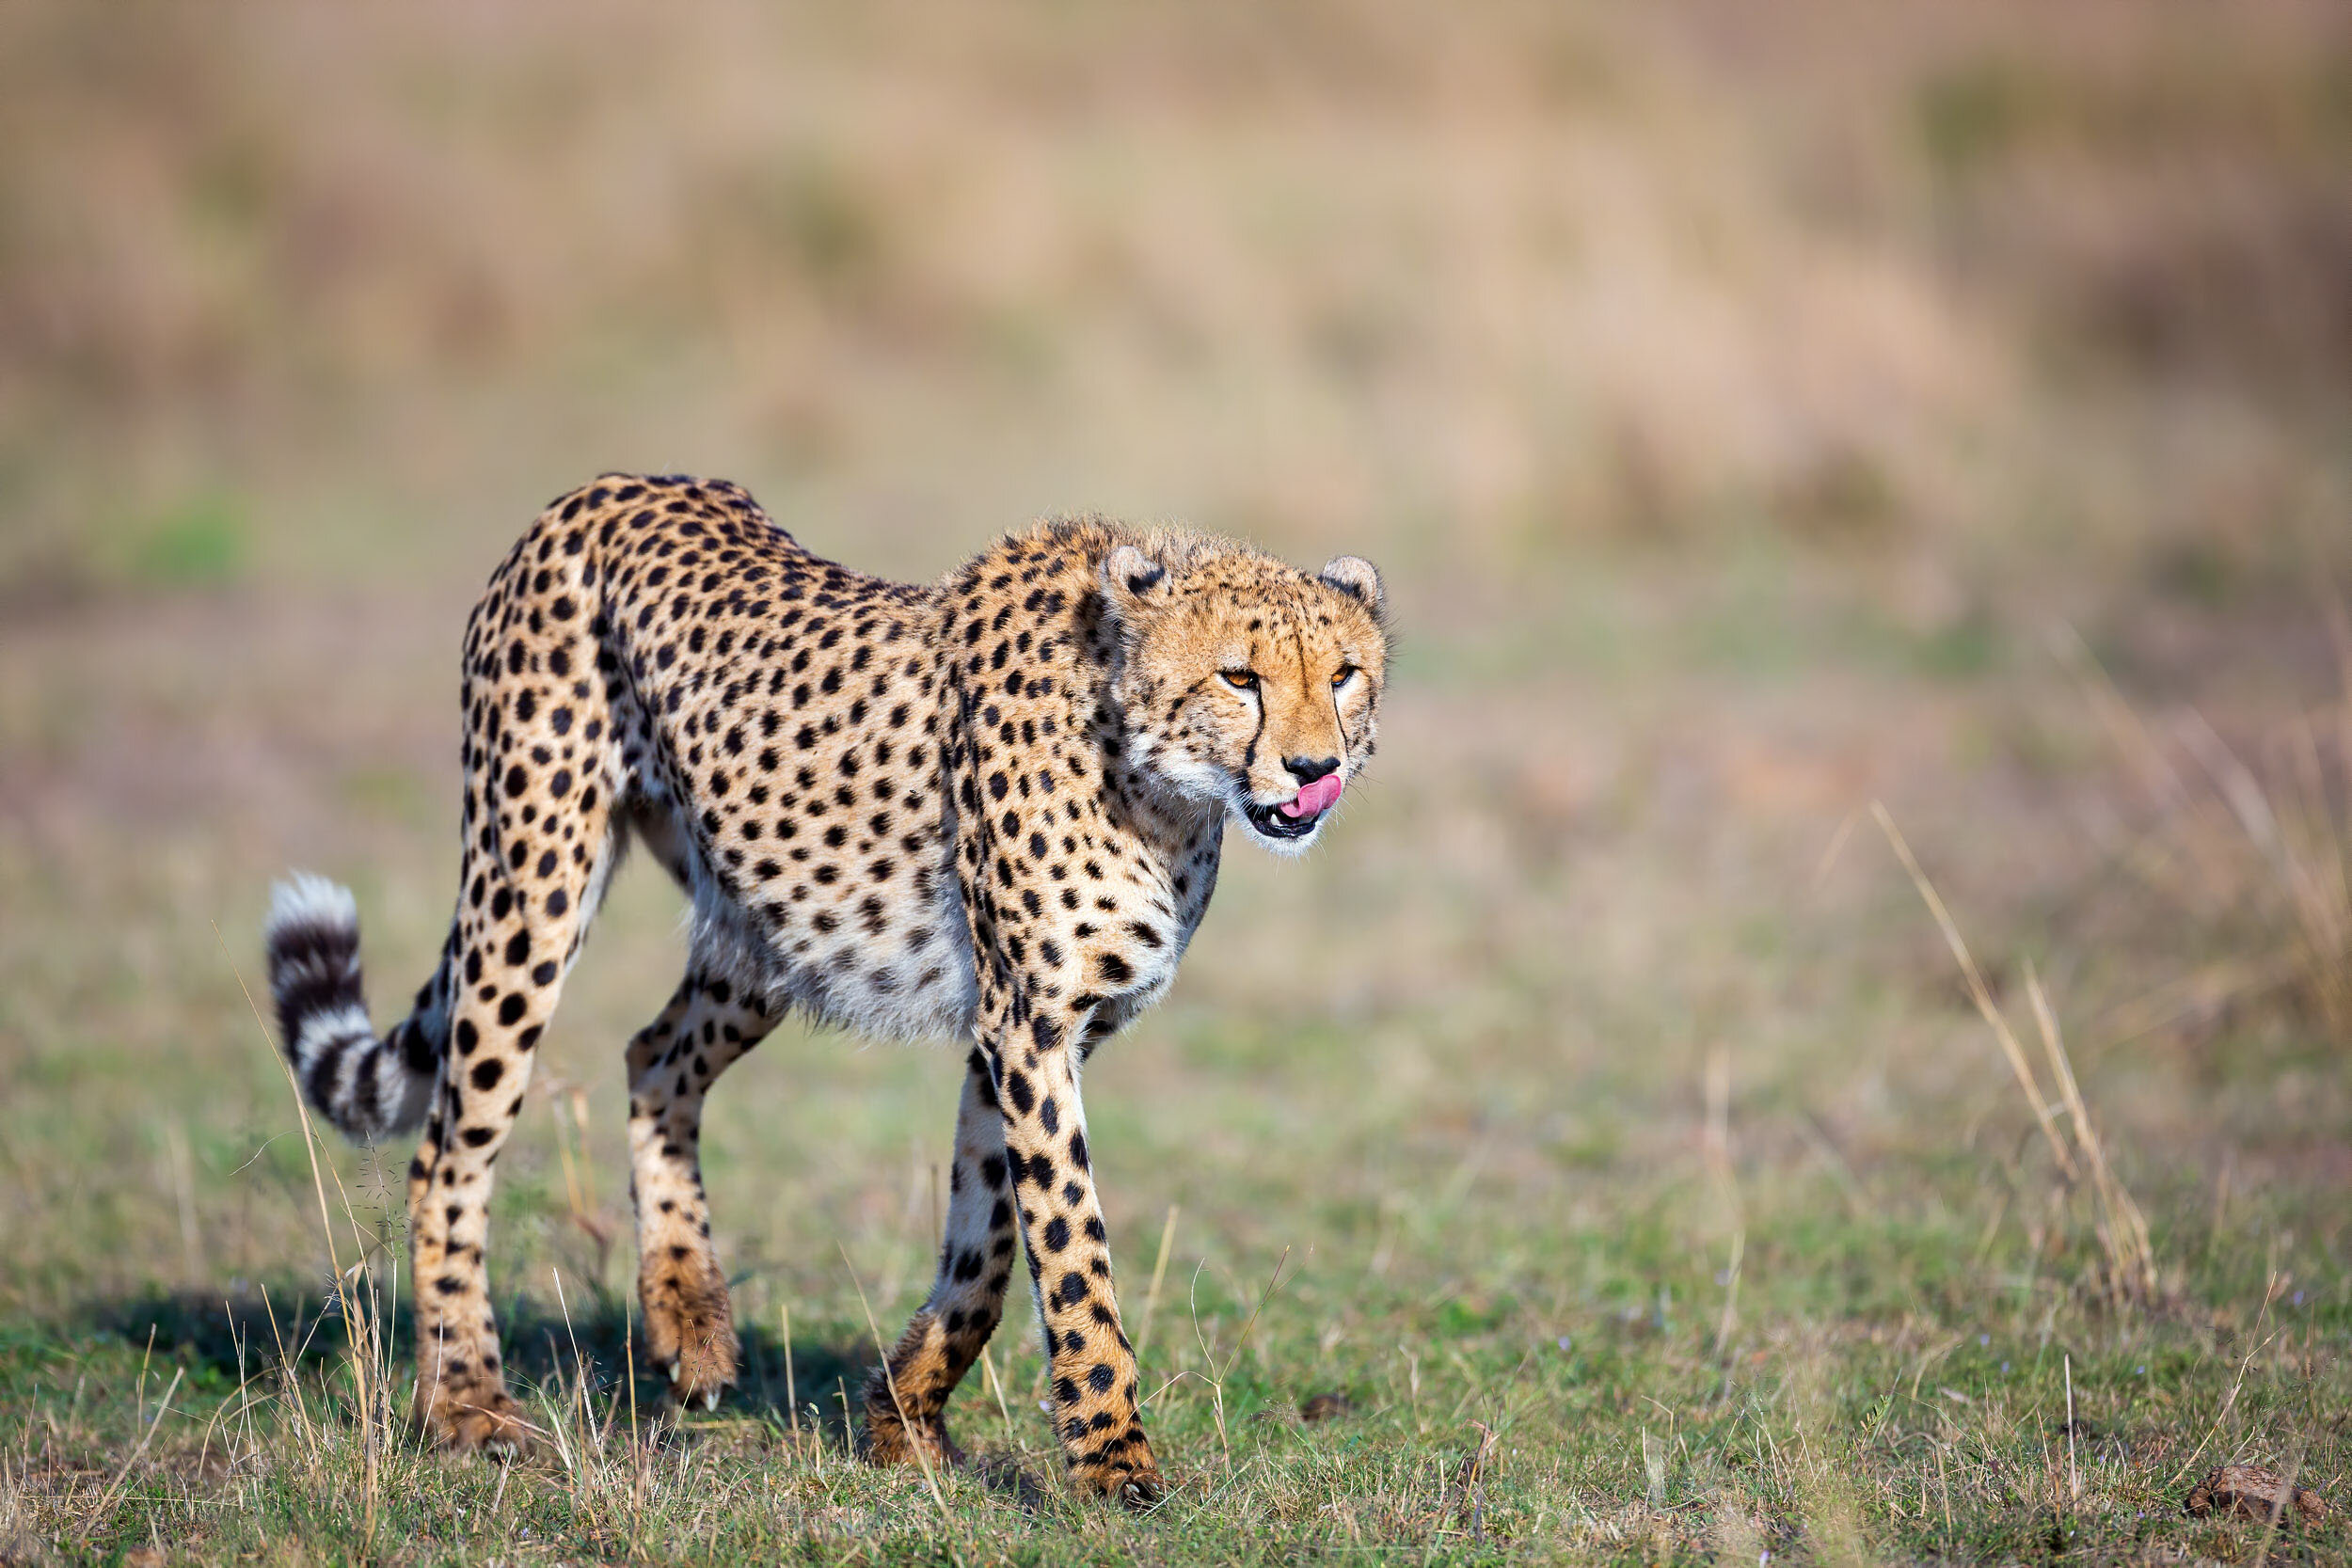  Cheetah walking through wet grass licking its lips. 